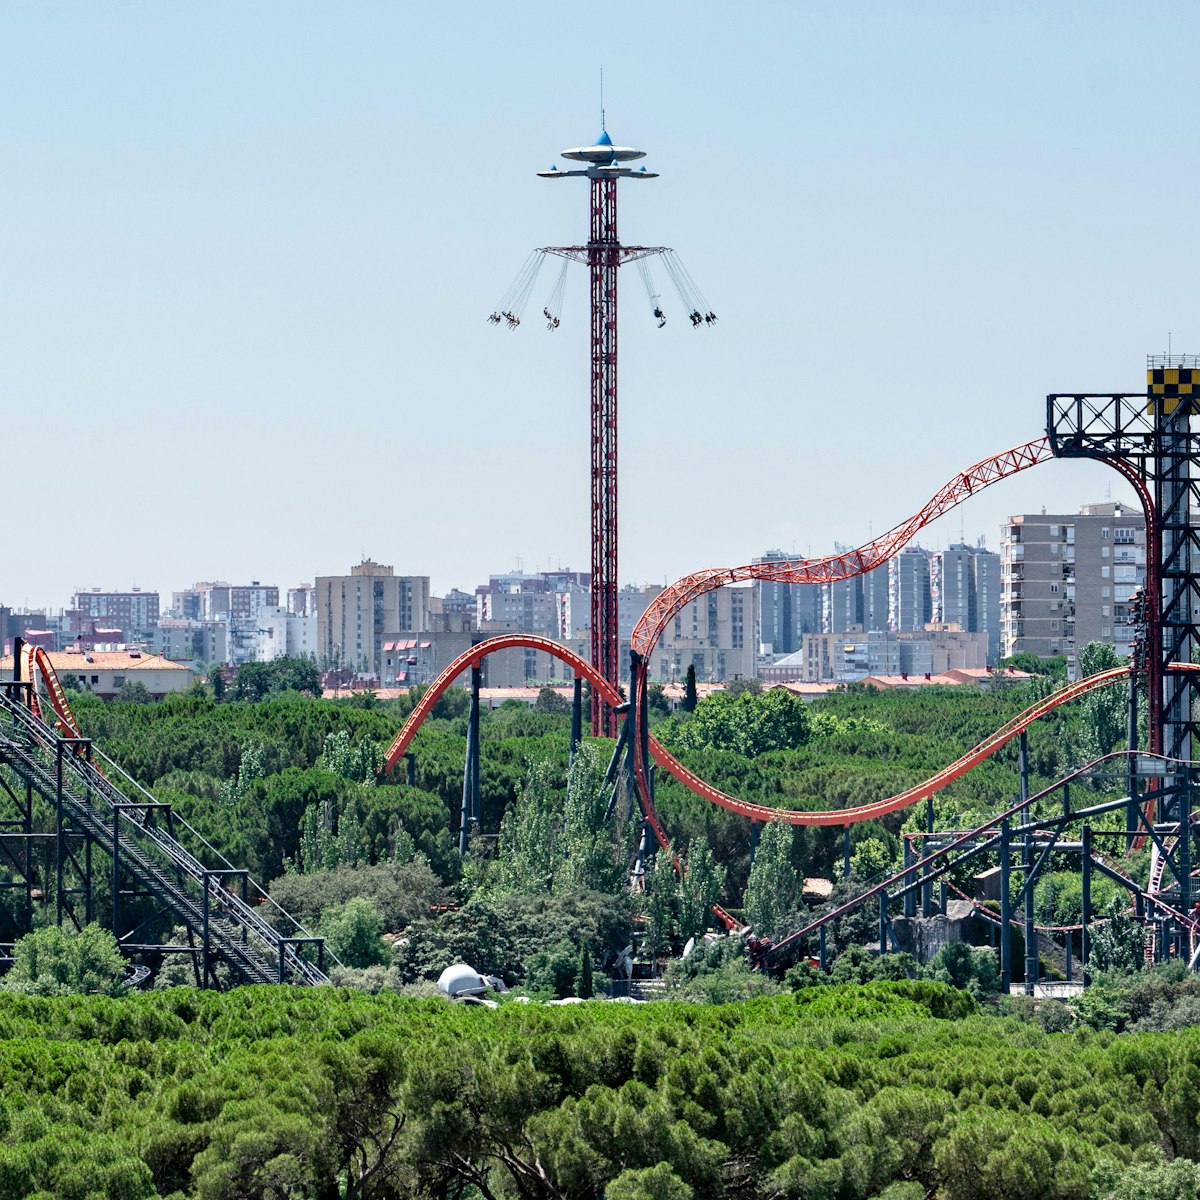 Panoramic of the amusement park